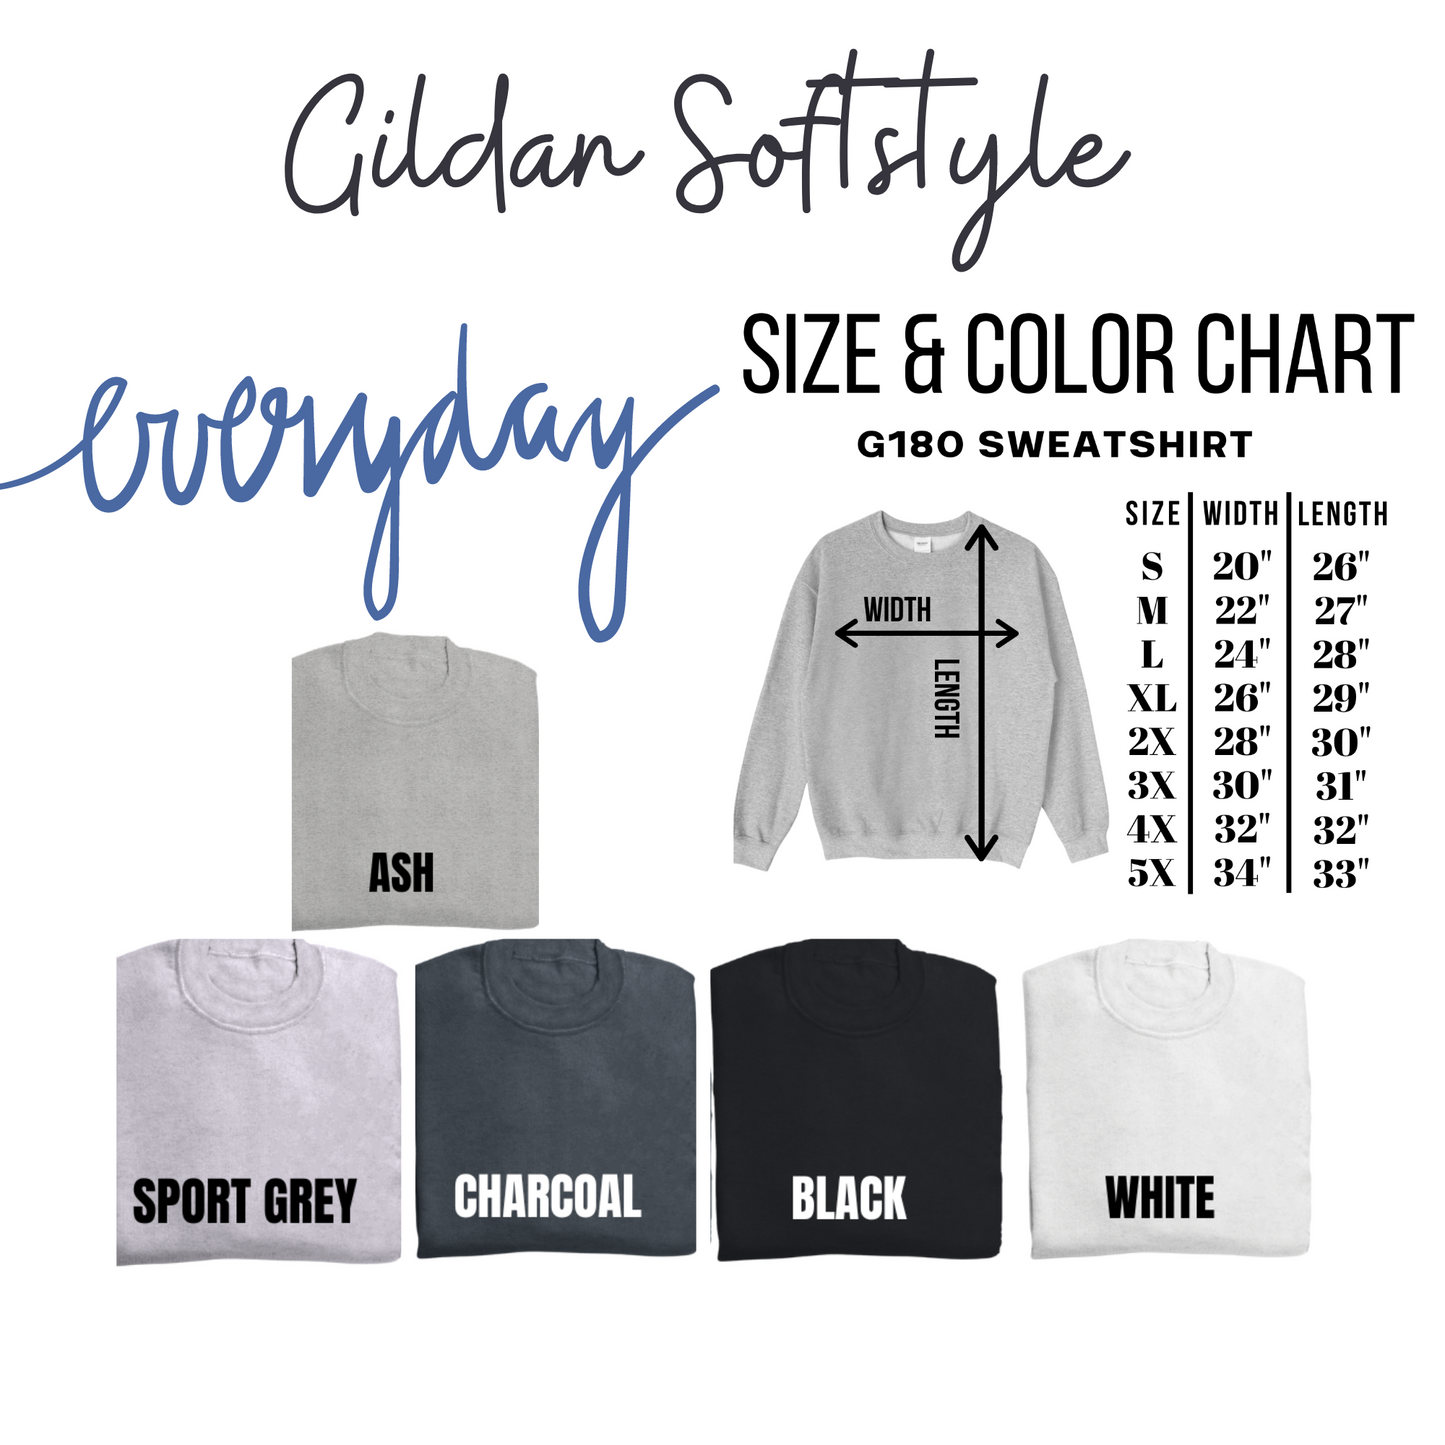 Sorry. Can't. Wrestling Gildan Soft style Sweatshirt or T-shirt